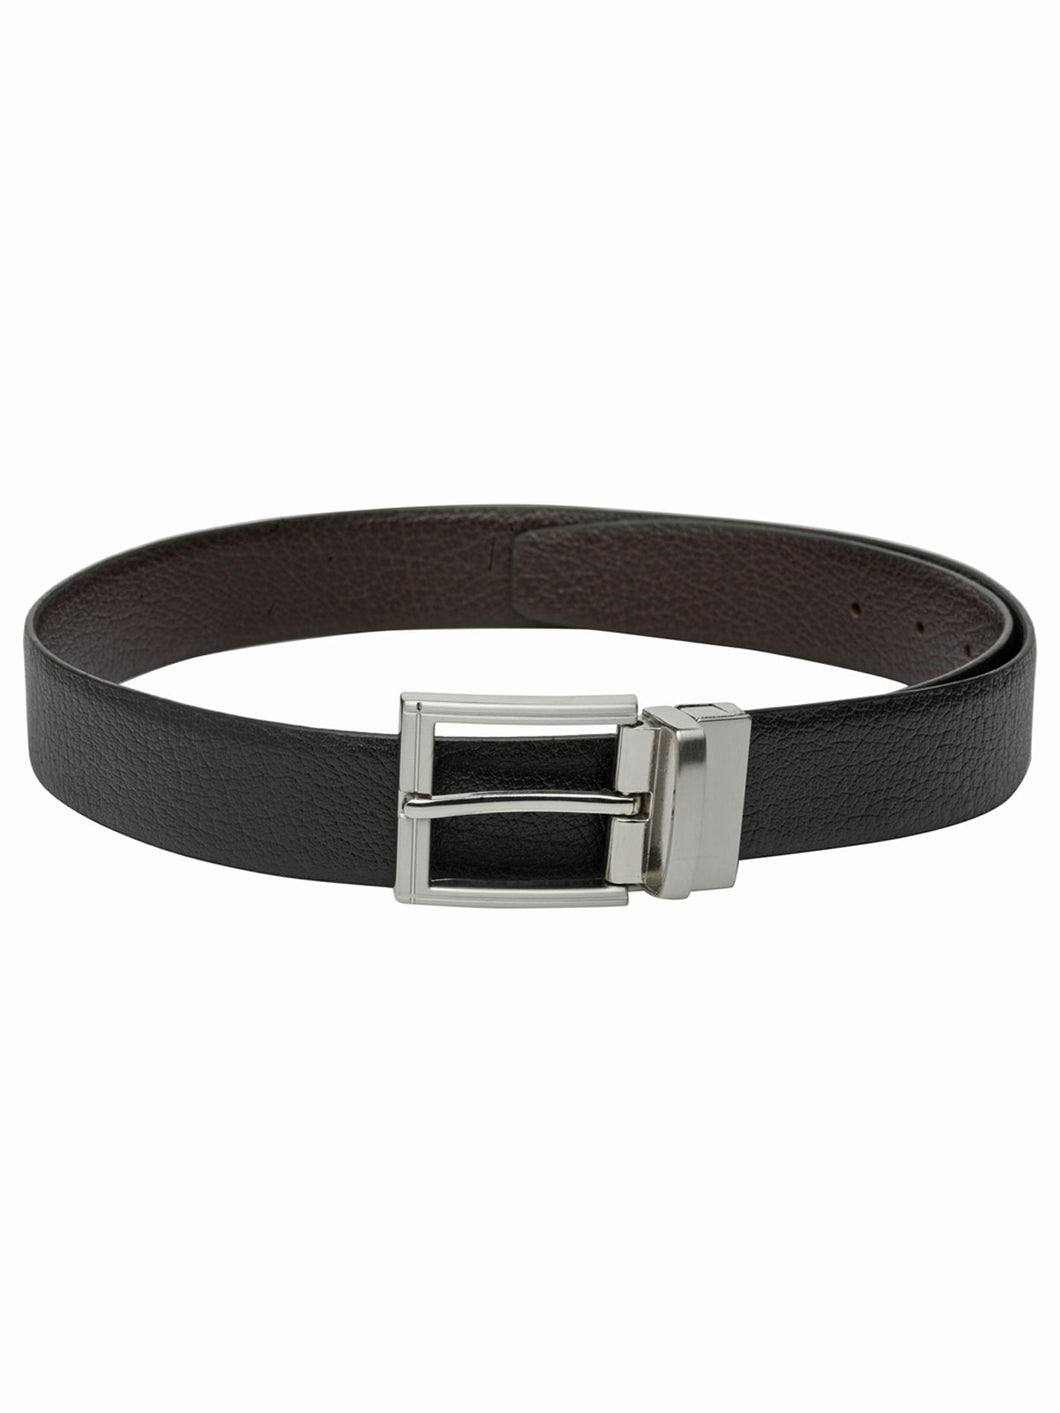 Teakwood Leathers Men's Black Formal Waist Belt